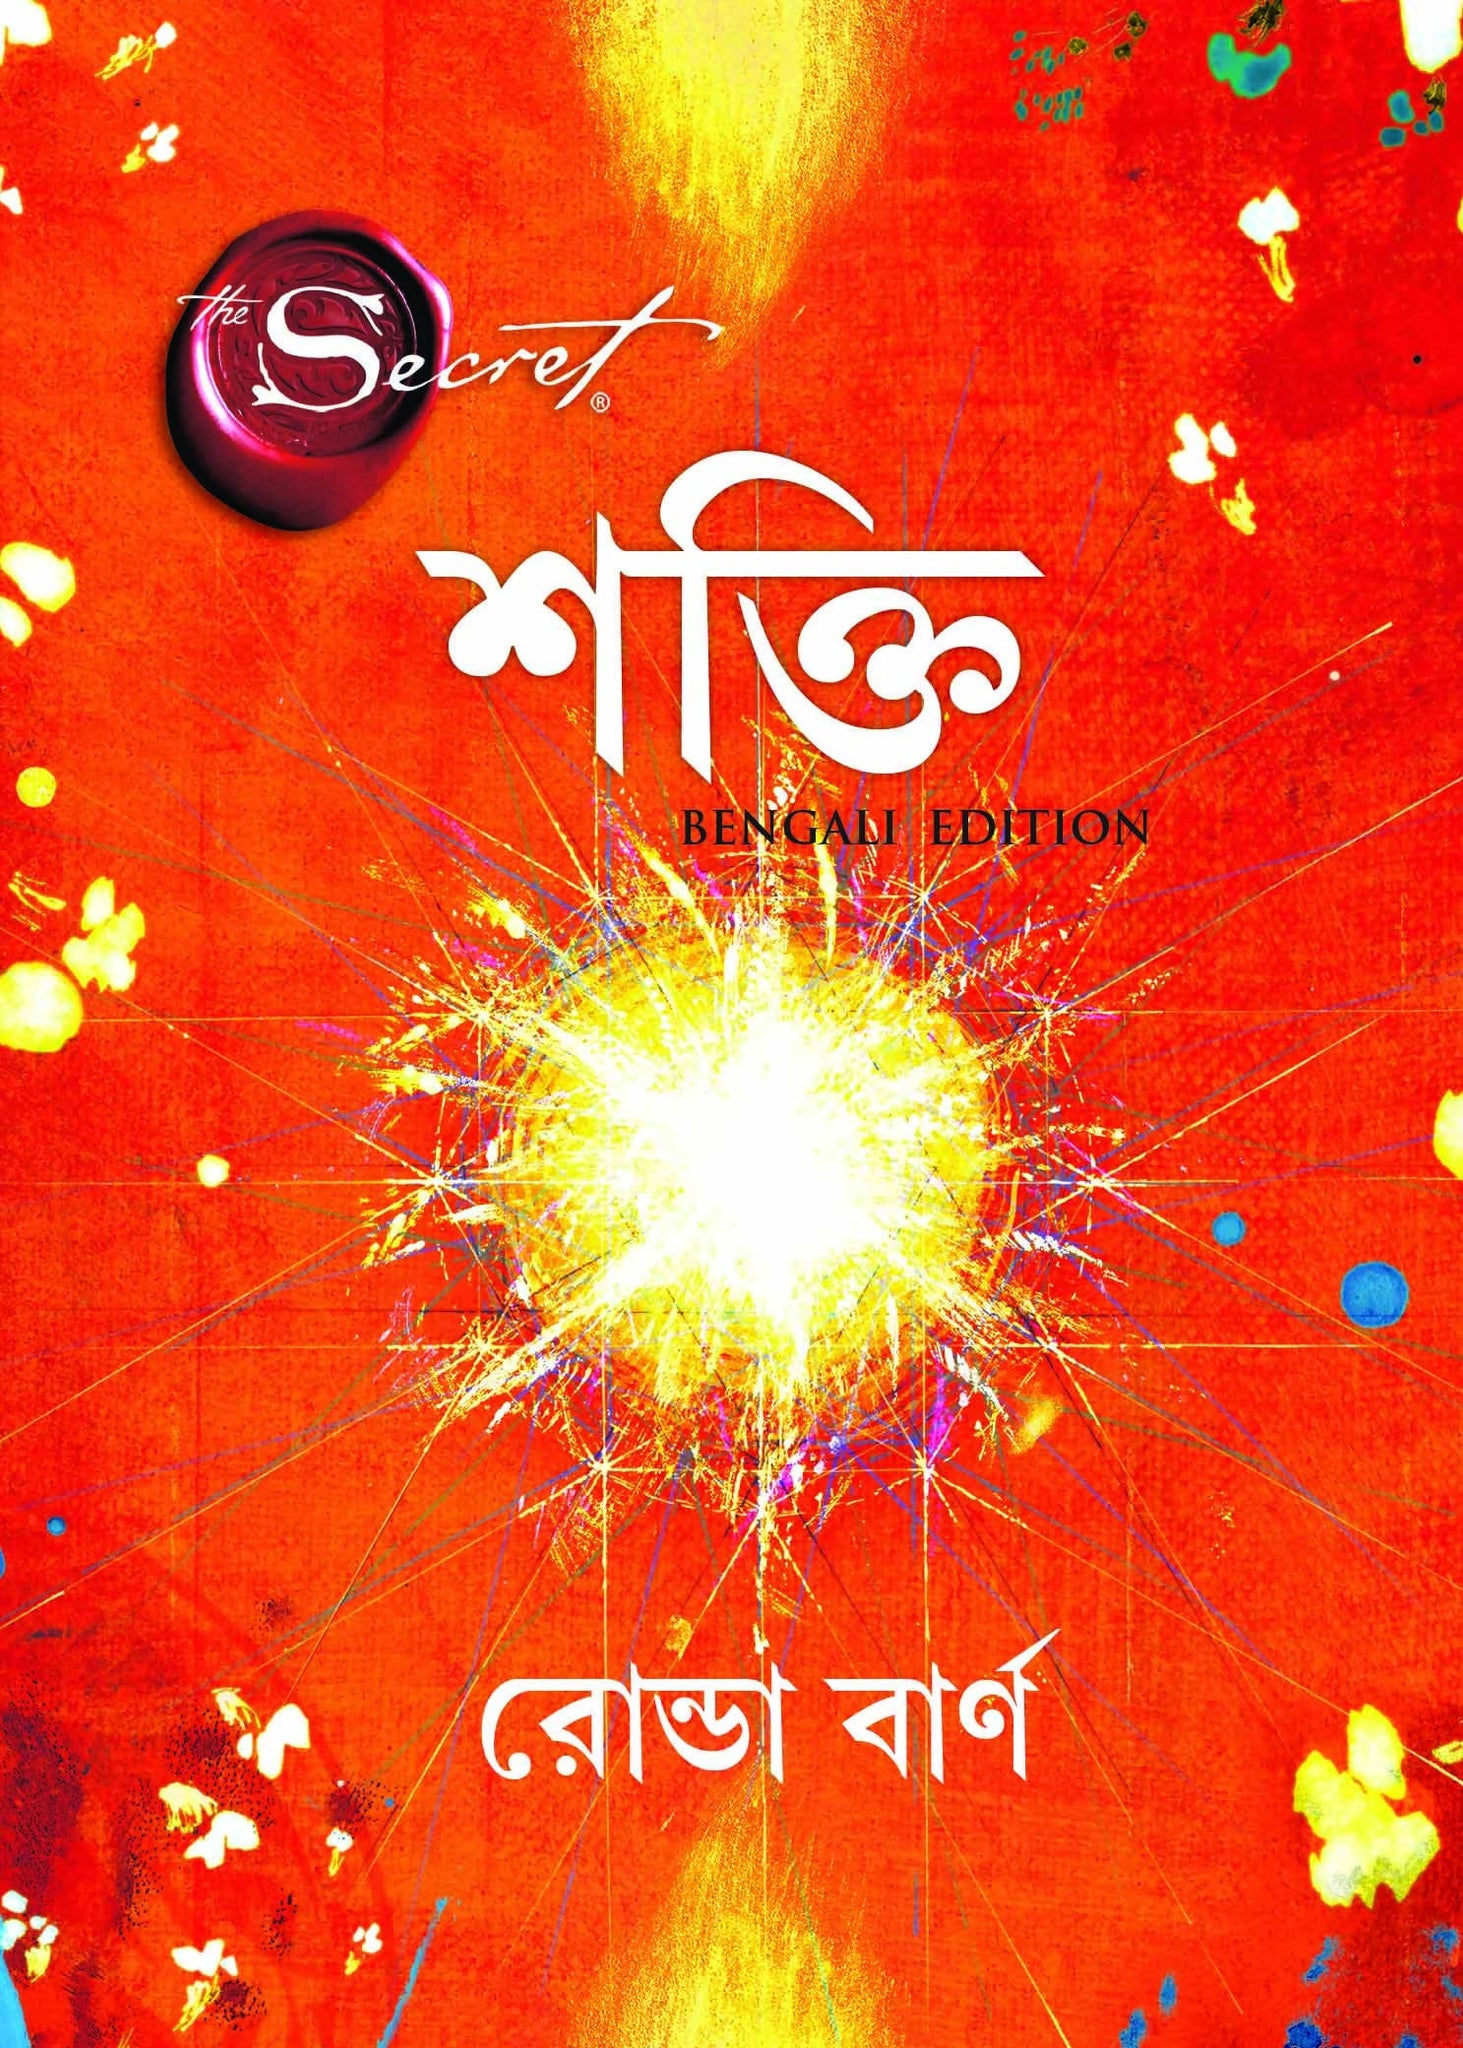 The Power (The Secret) - Bengali